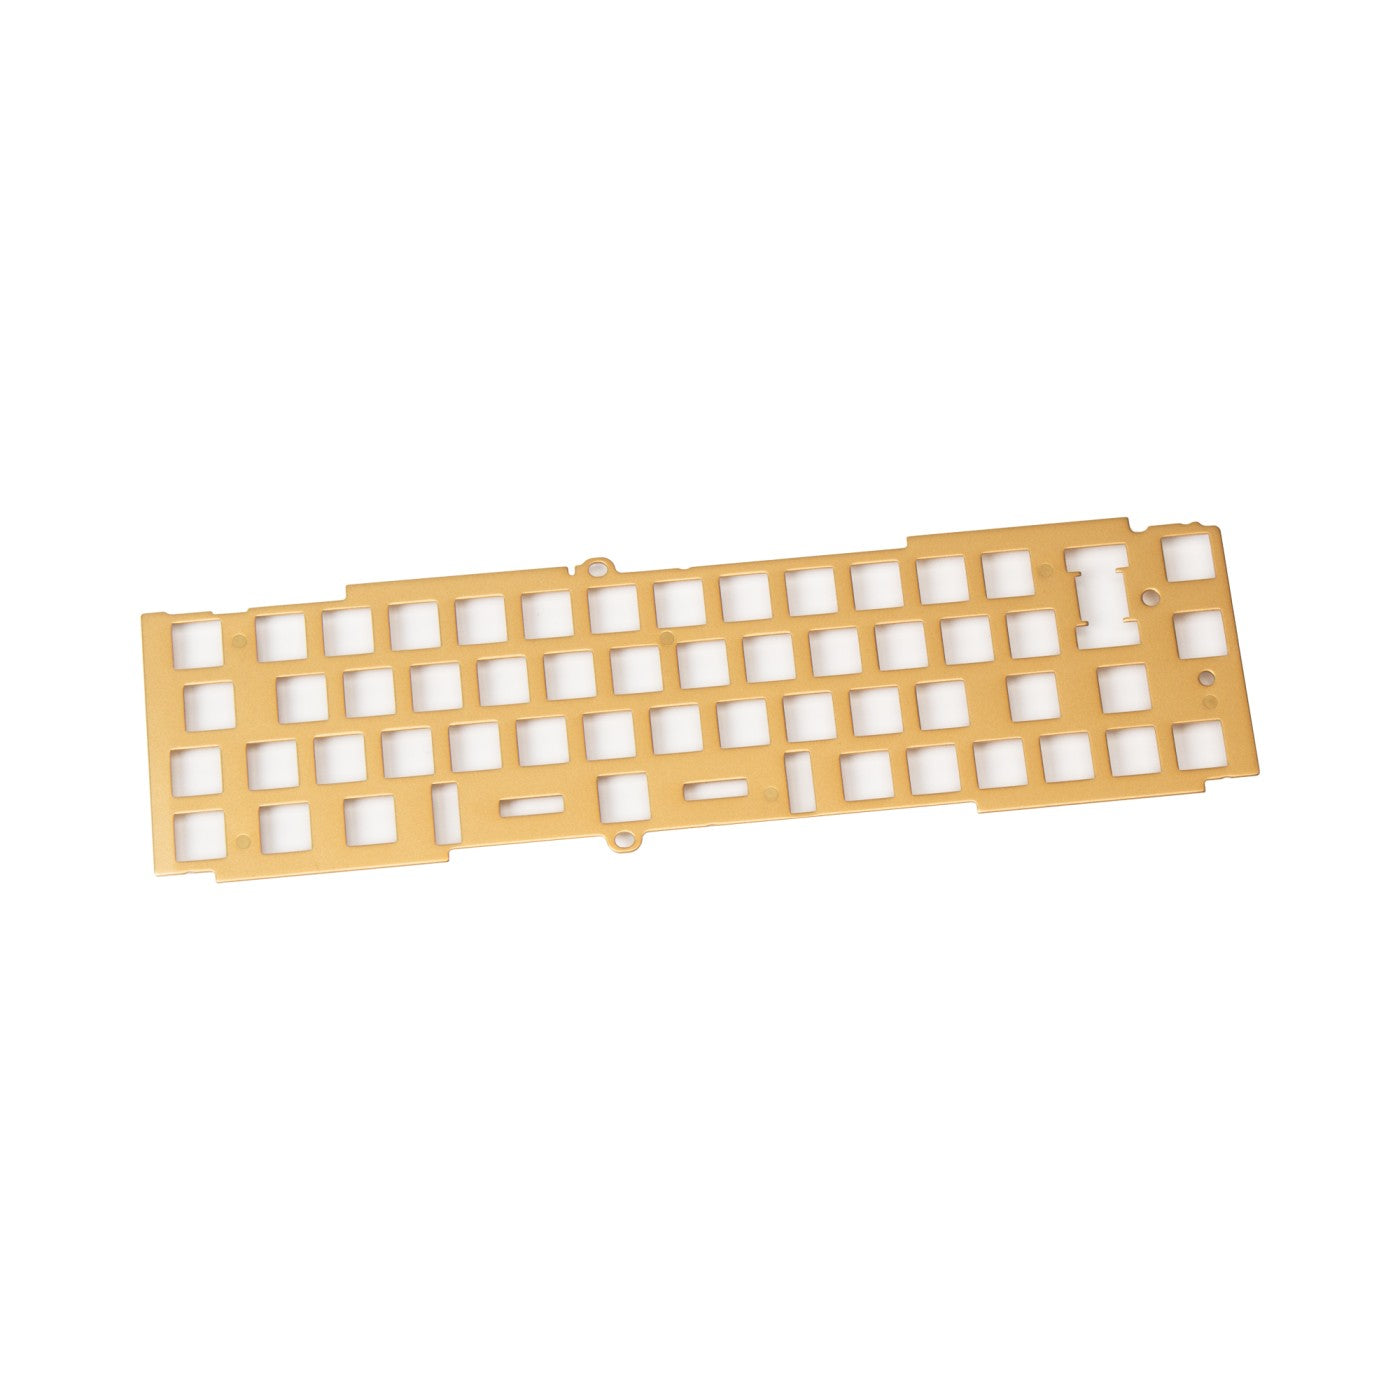 Keychron Q9 Keyboard Brass Plate ISO Layout